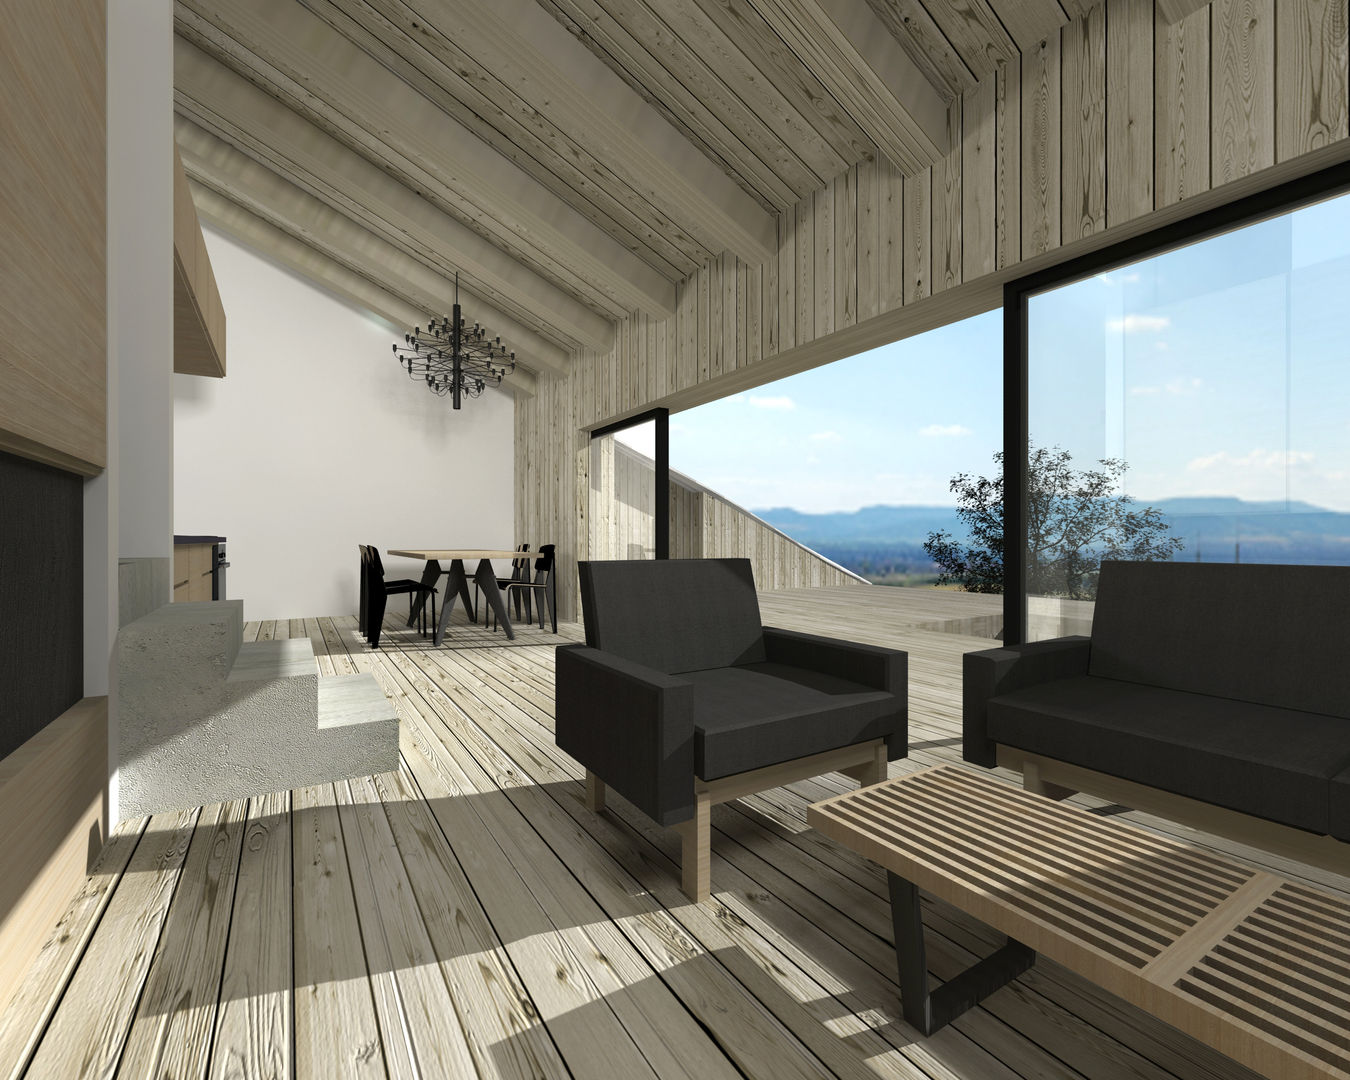 Dom letniskowy na skale, BIG IDEA studio projektowe BIG IDEA studio projektowe Living room Wood Wood effect